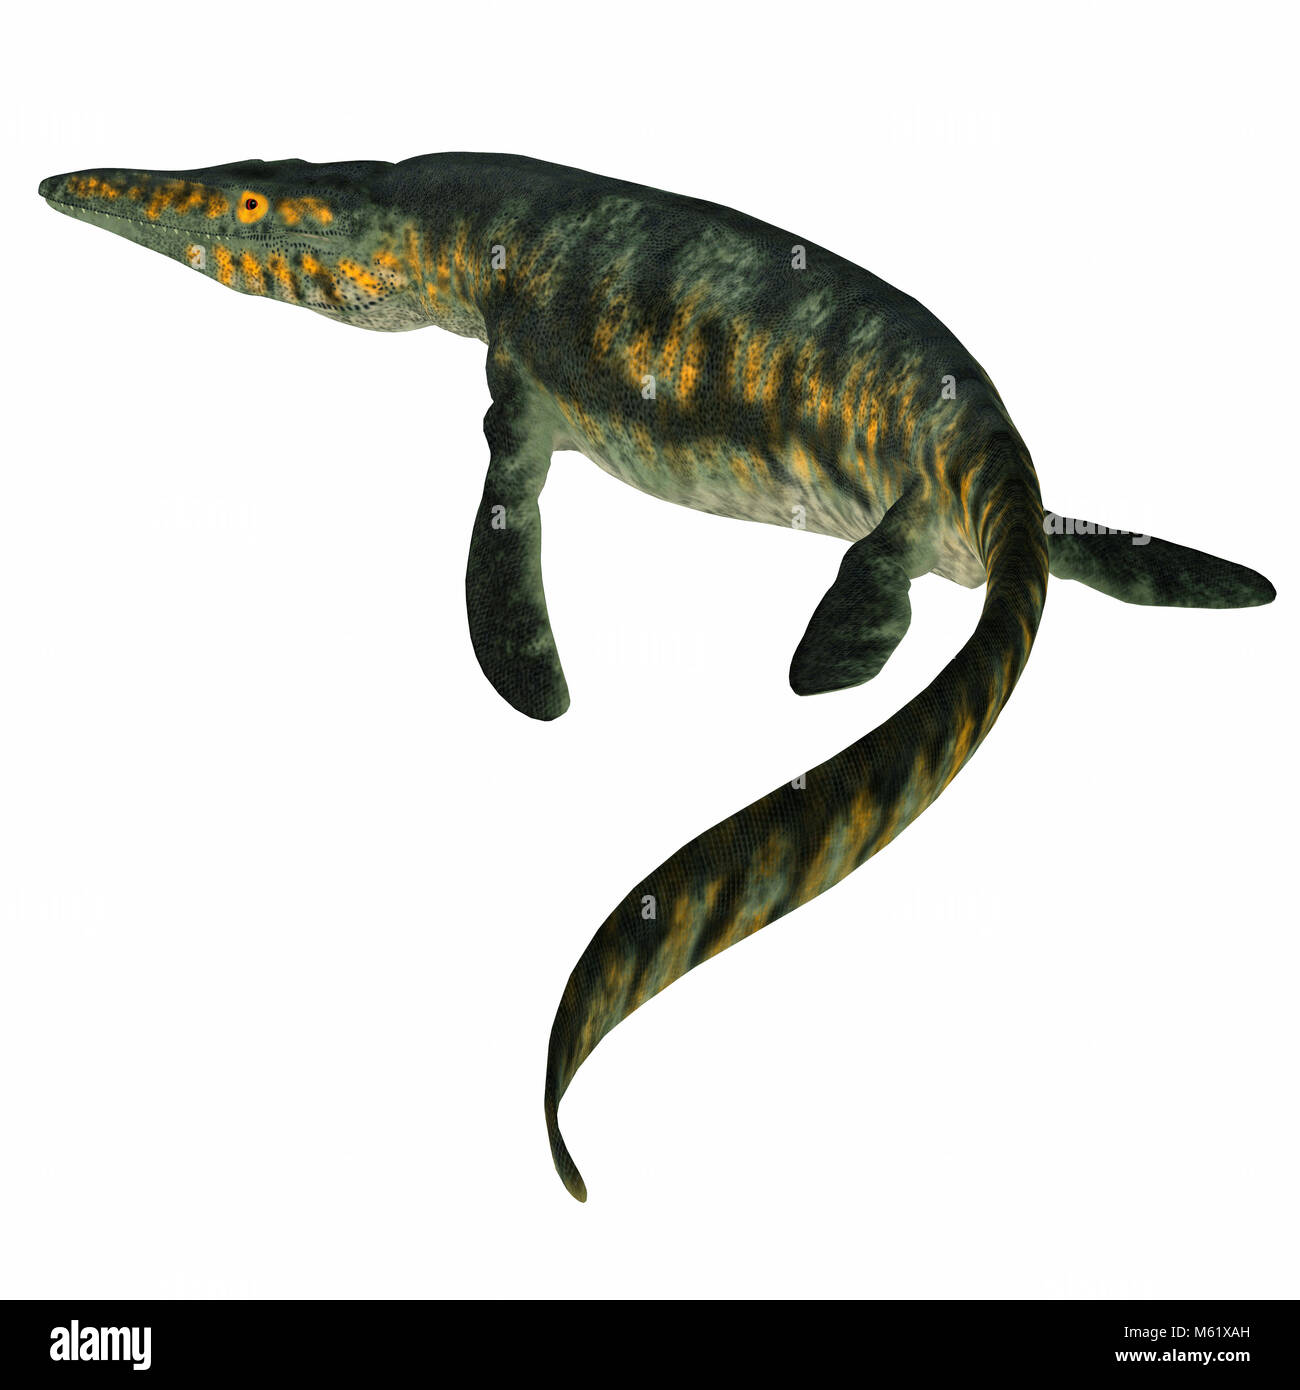 Tylosaurus Marine Reptile Tylosaurus Was A Carnivorous